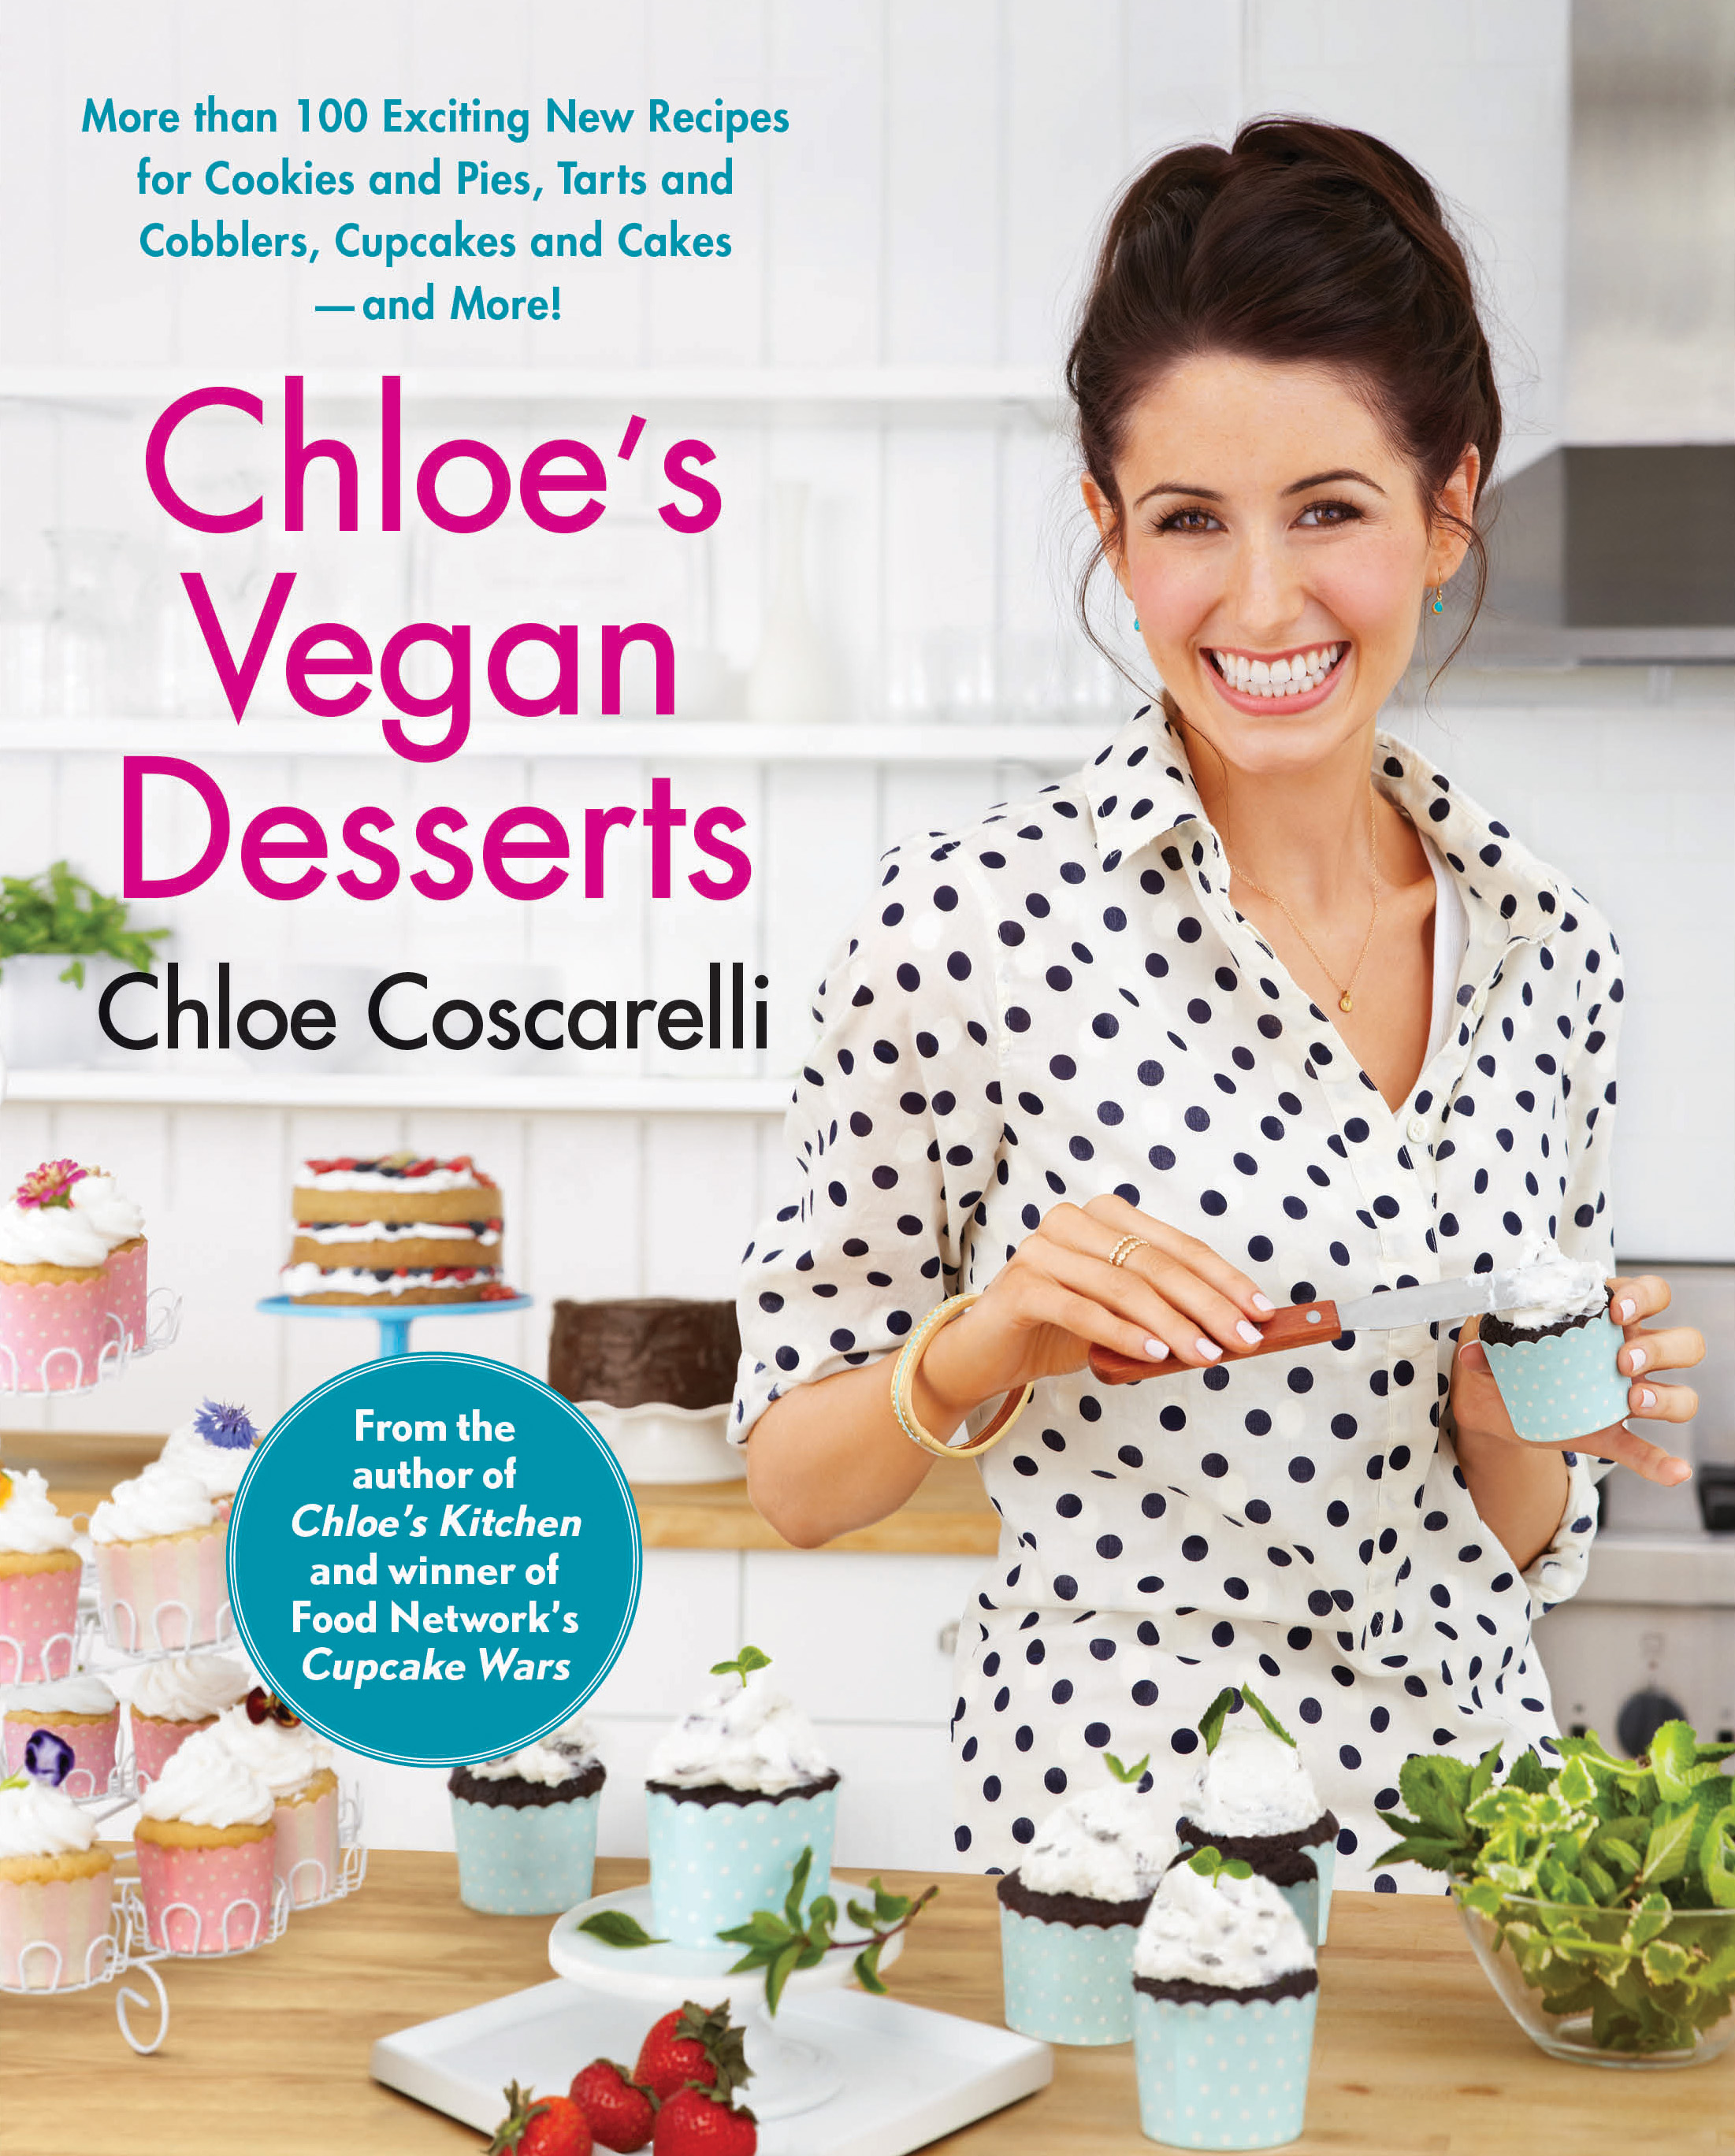 Chloe's Vegan Desserts cookbook cover